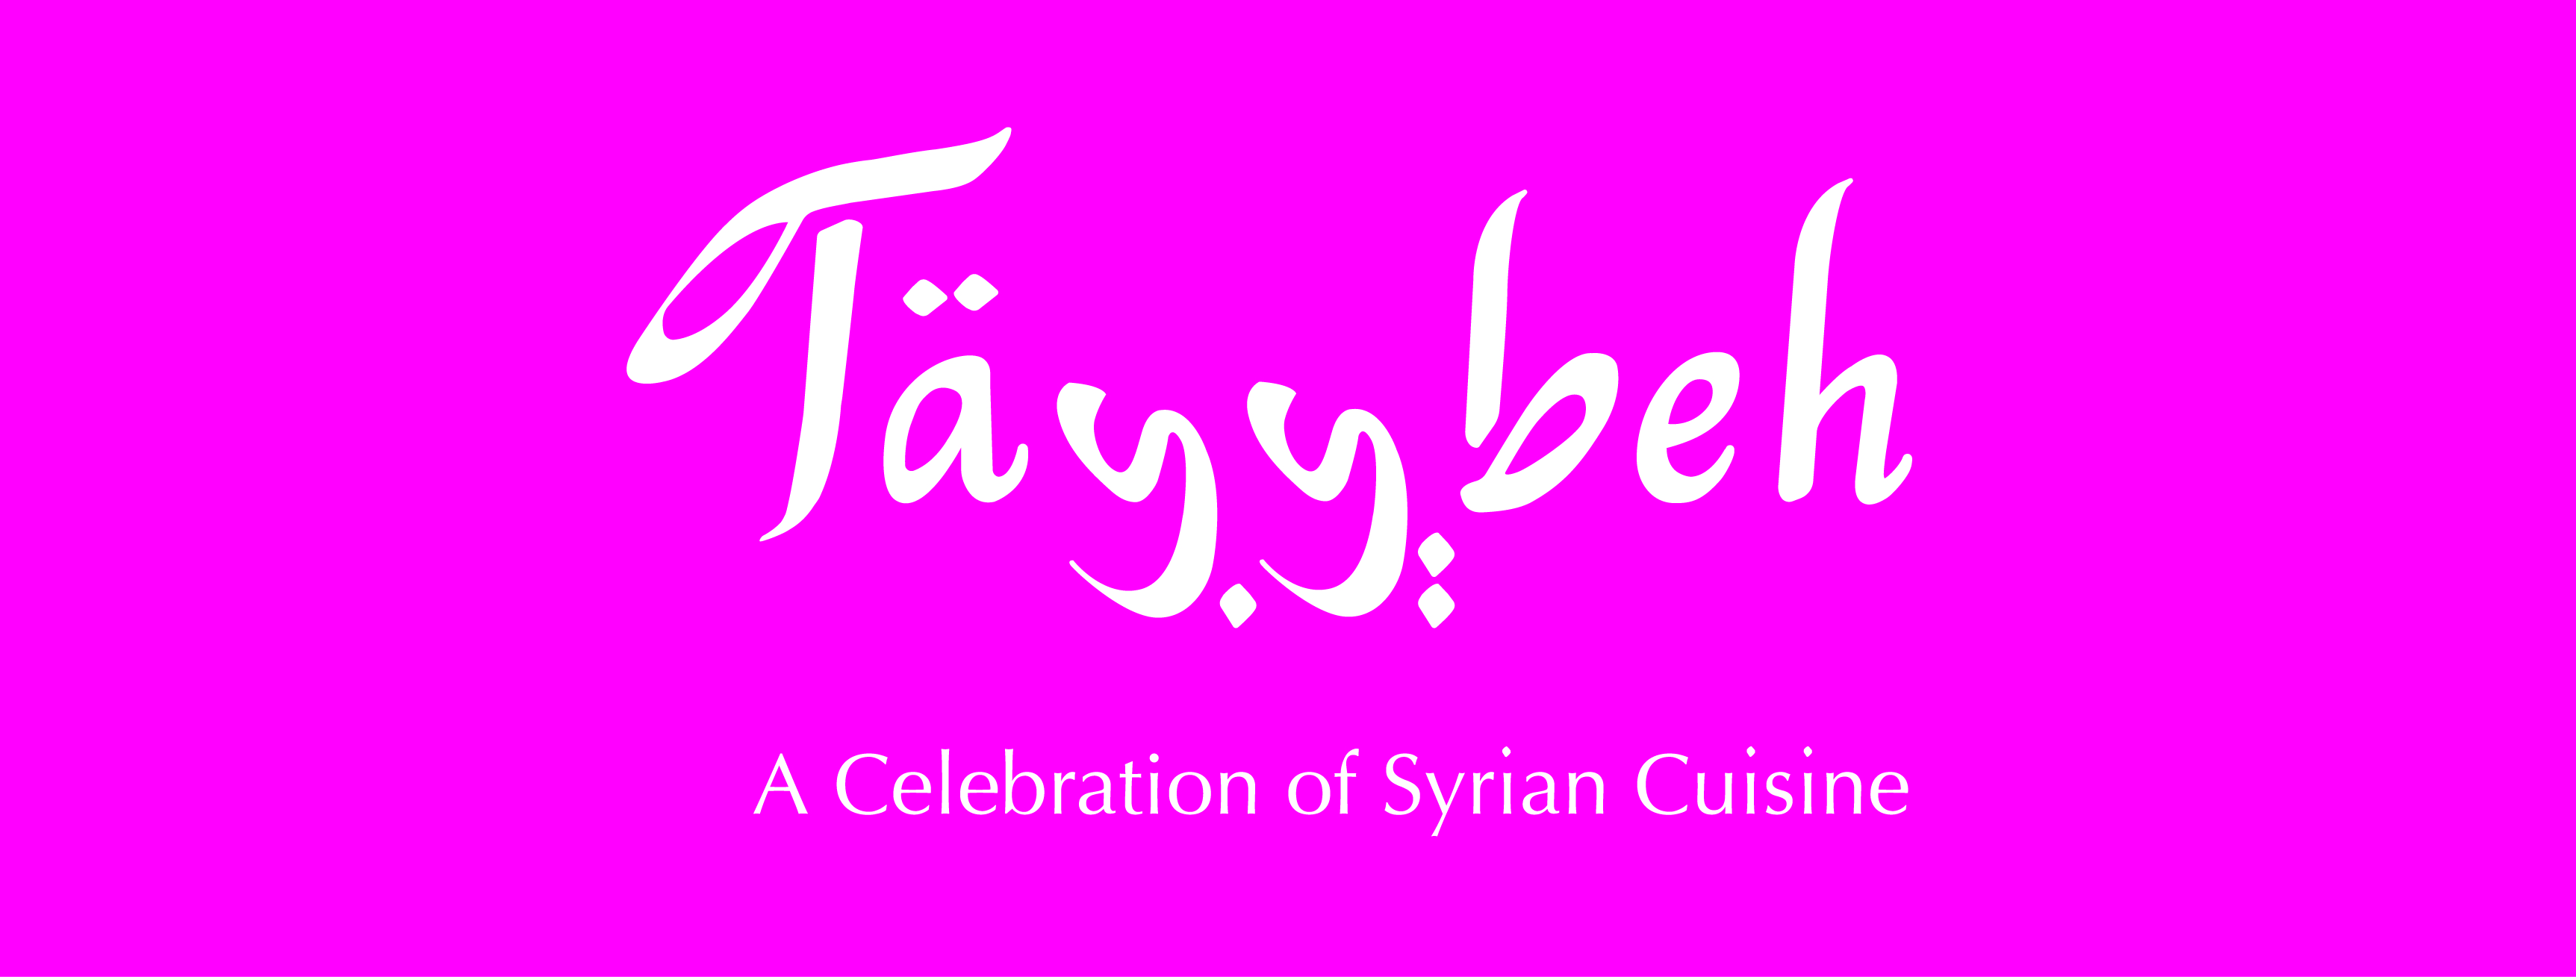 Tayybeh logo